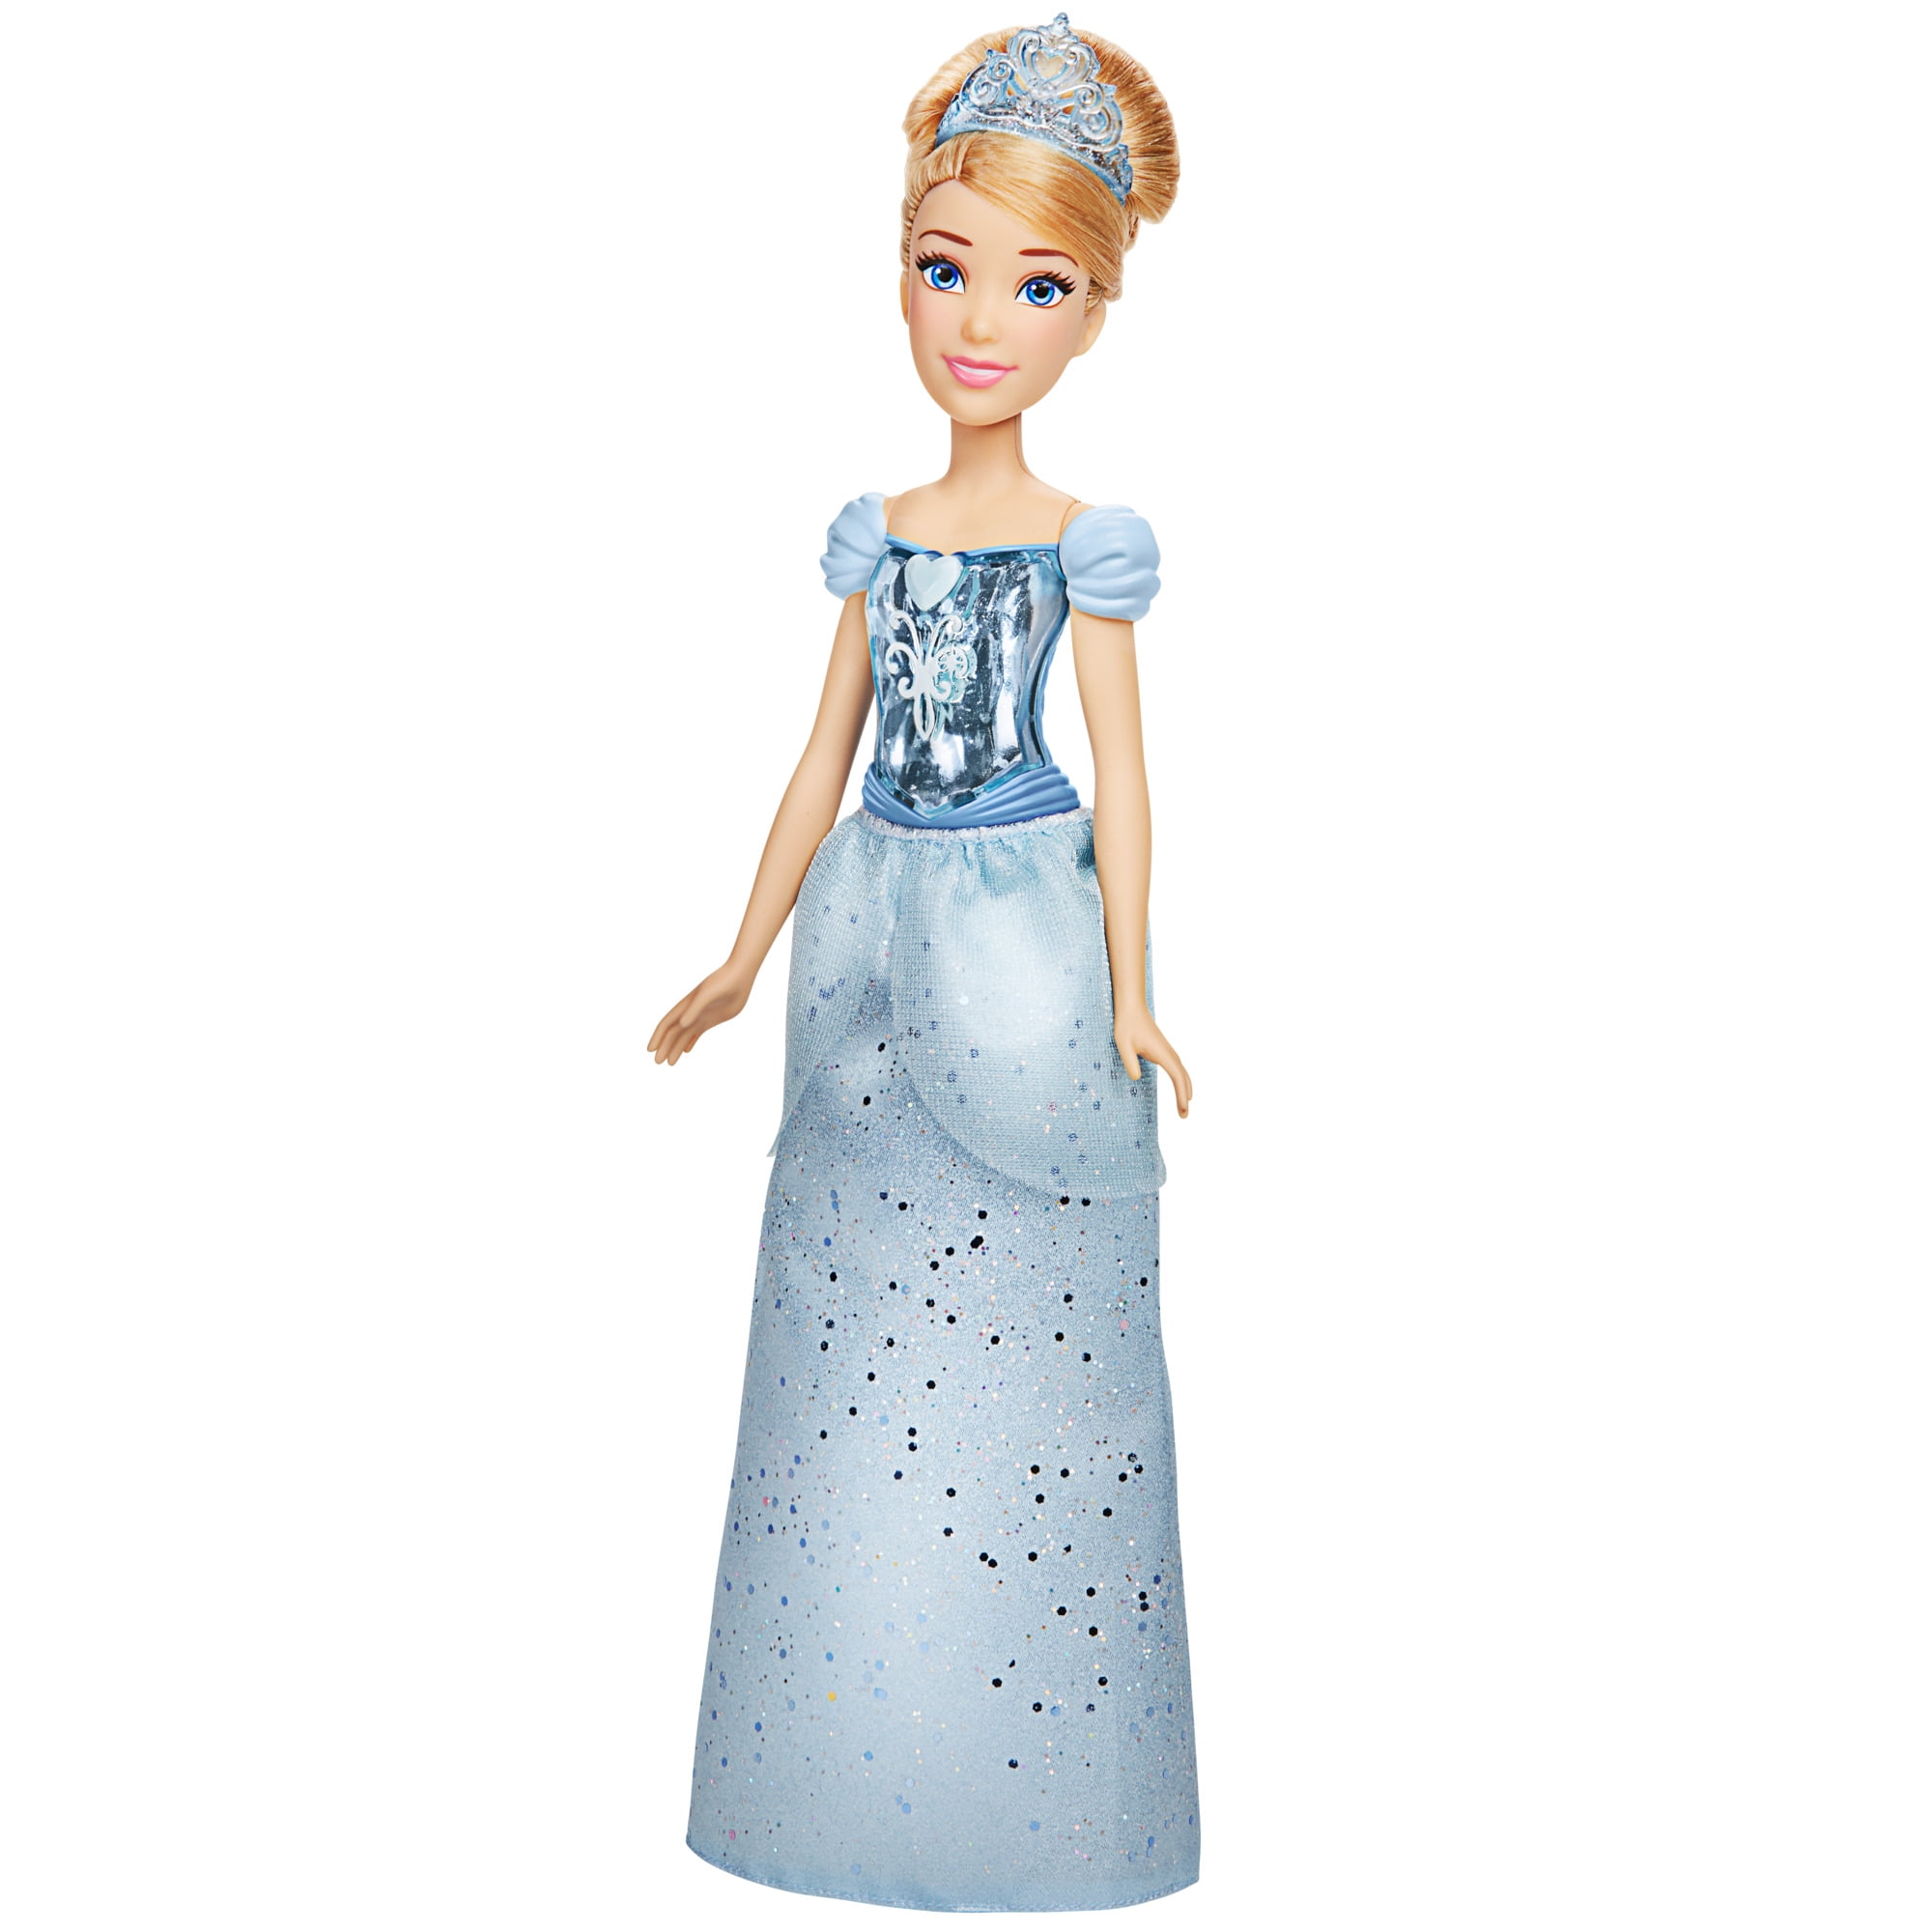 Black Wedding Dress Princess Kids Toys For Barbi with White Flower Decor*~* 